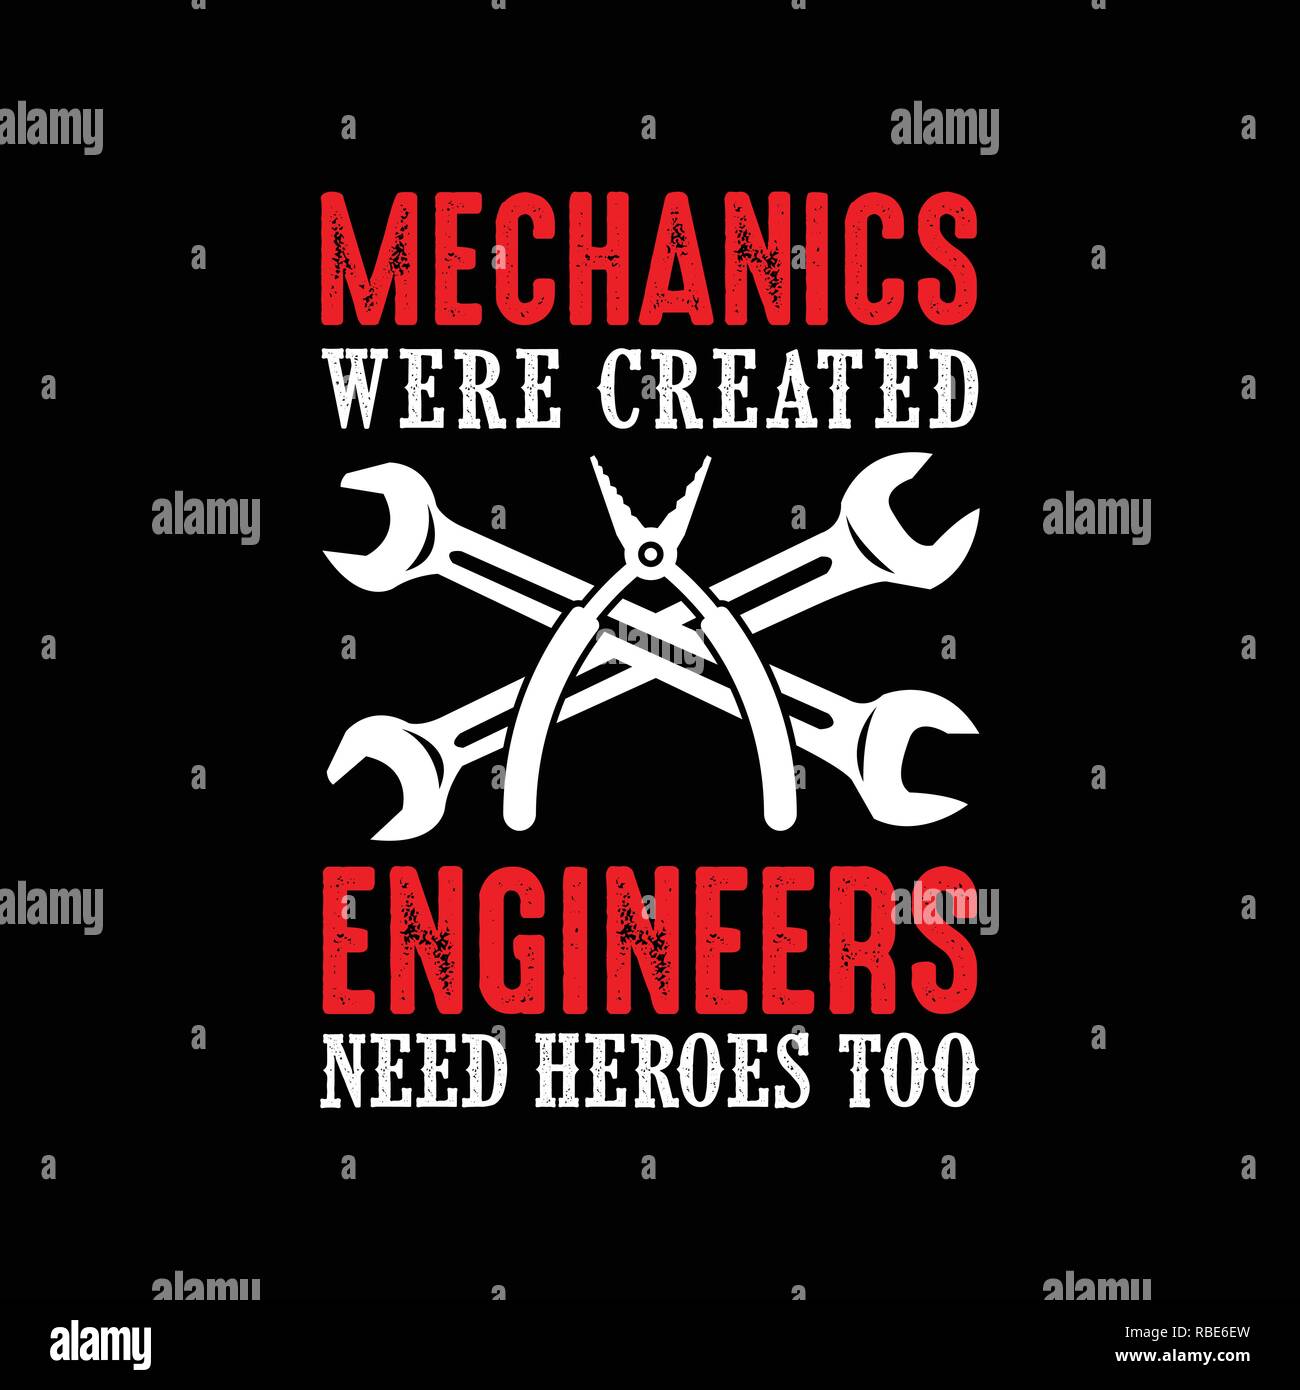 Mechanic Quote and saying. Mechanic were created engineers need heroes too Stock Vector